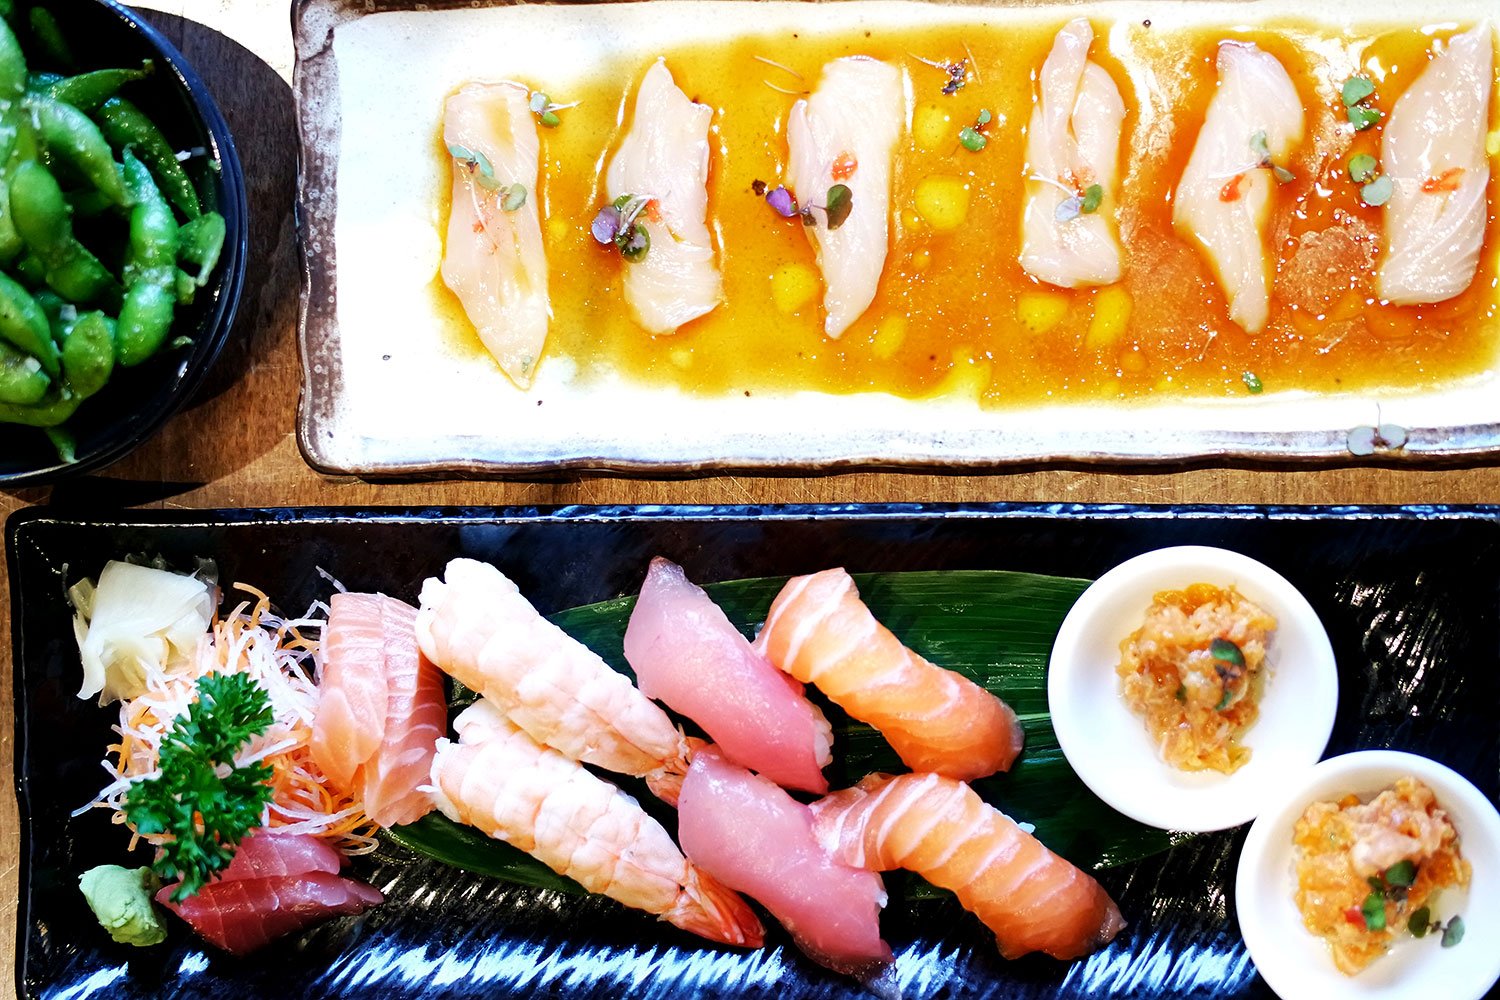 Clockwise from top left: pesto edamame, kingfish carpaccio, sushi and sashimi combination